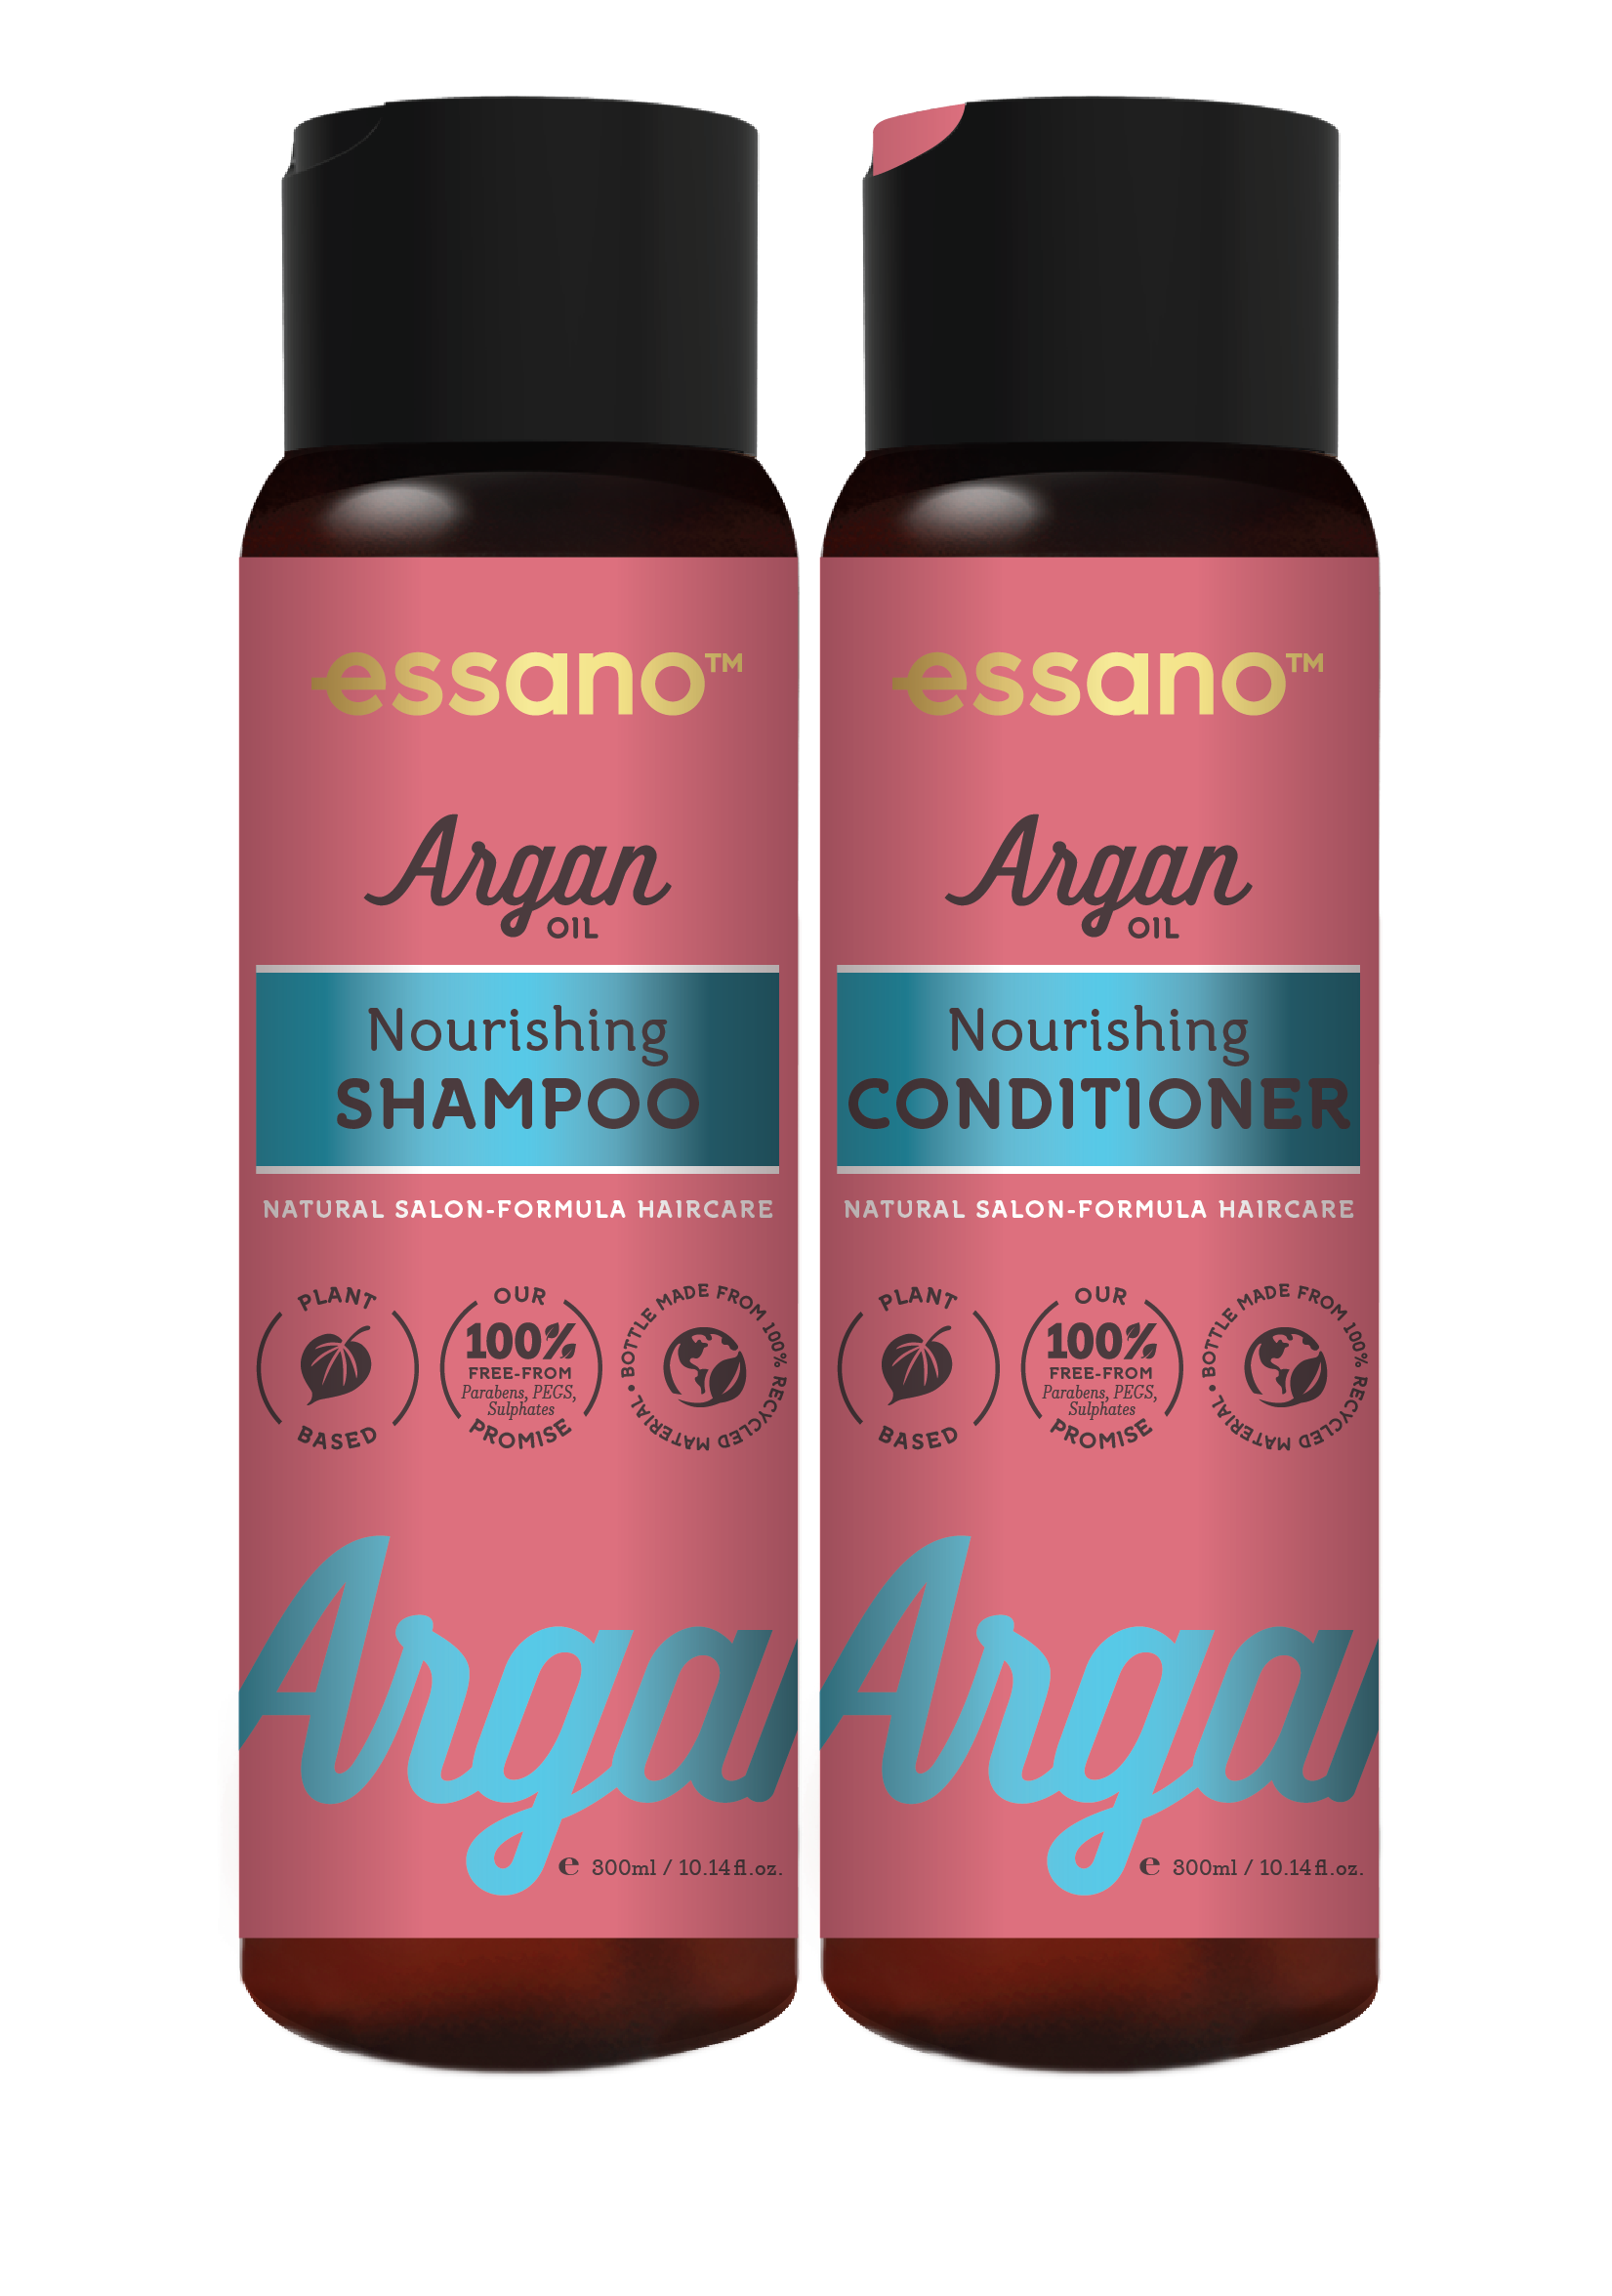 Essano Argan Oil of Morocco Nourishing Shampoo and Conditioner duo